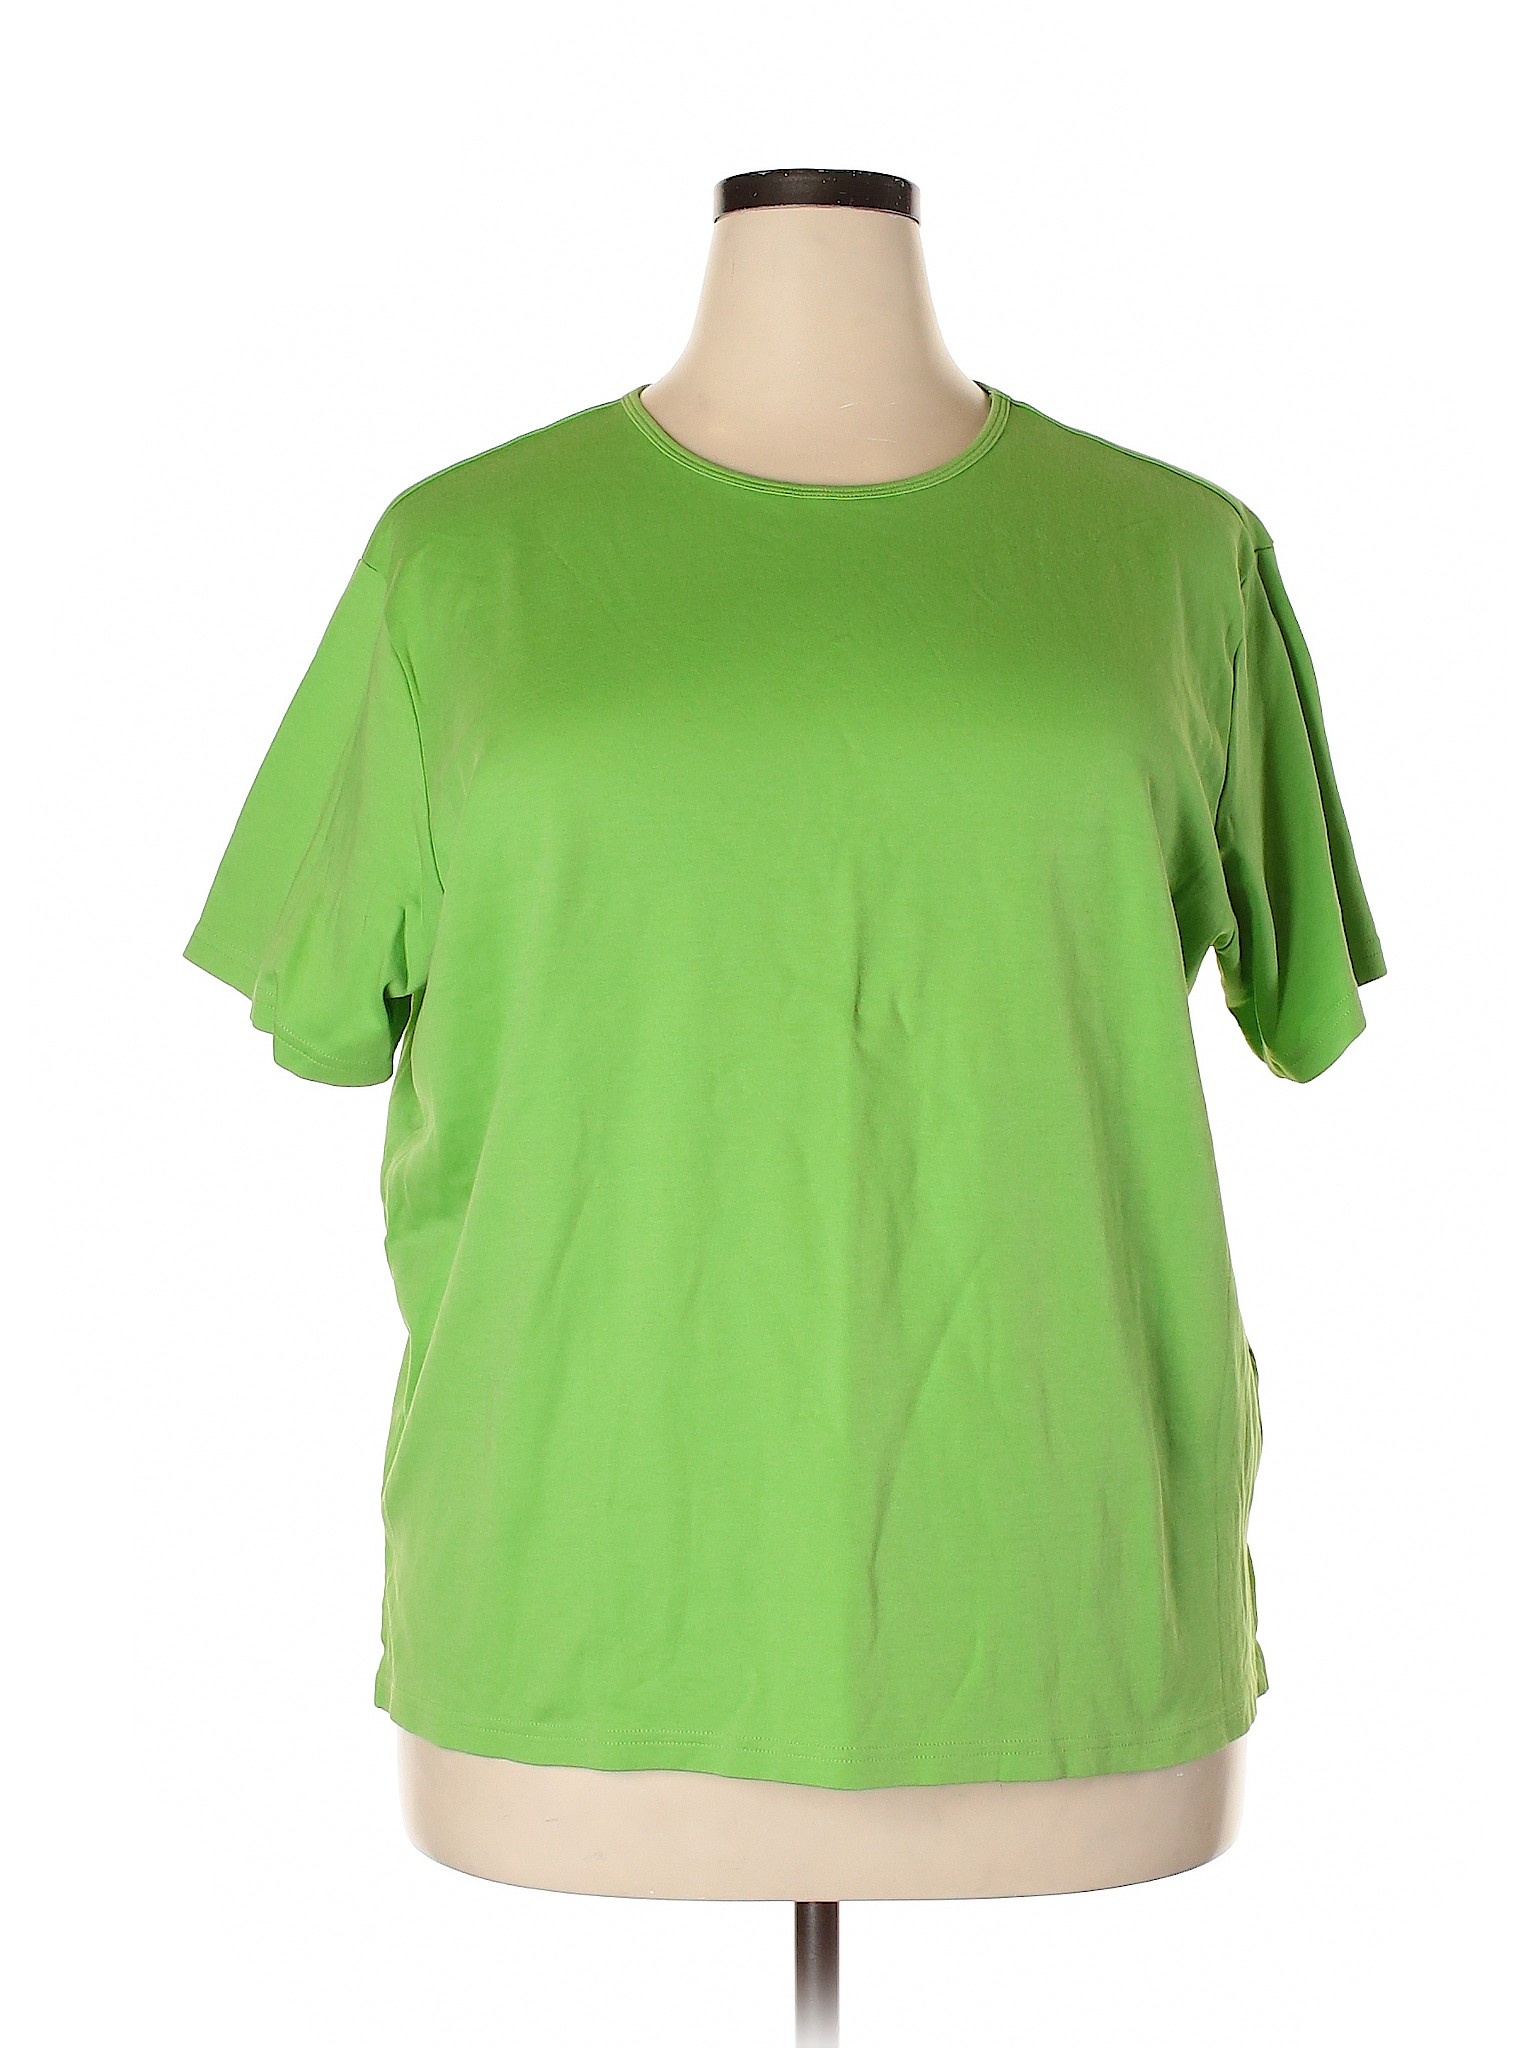 Details about Talbots Women Green Short Sleeve T Shirt 3X Plus